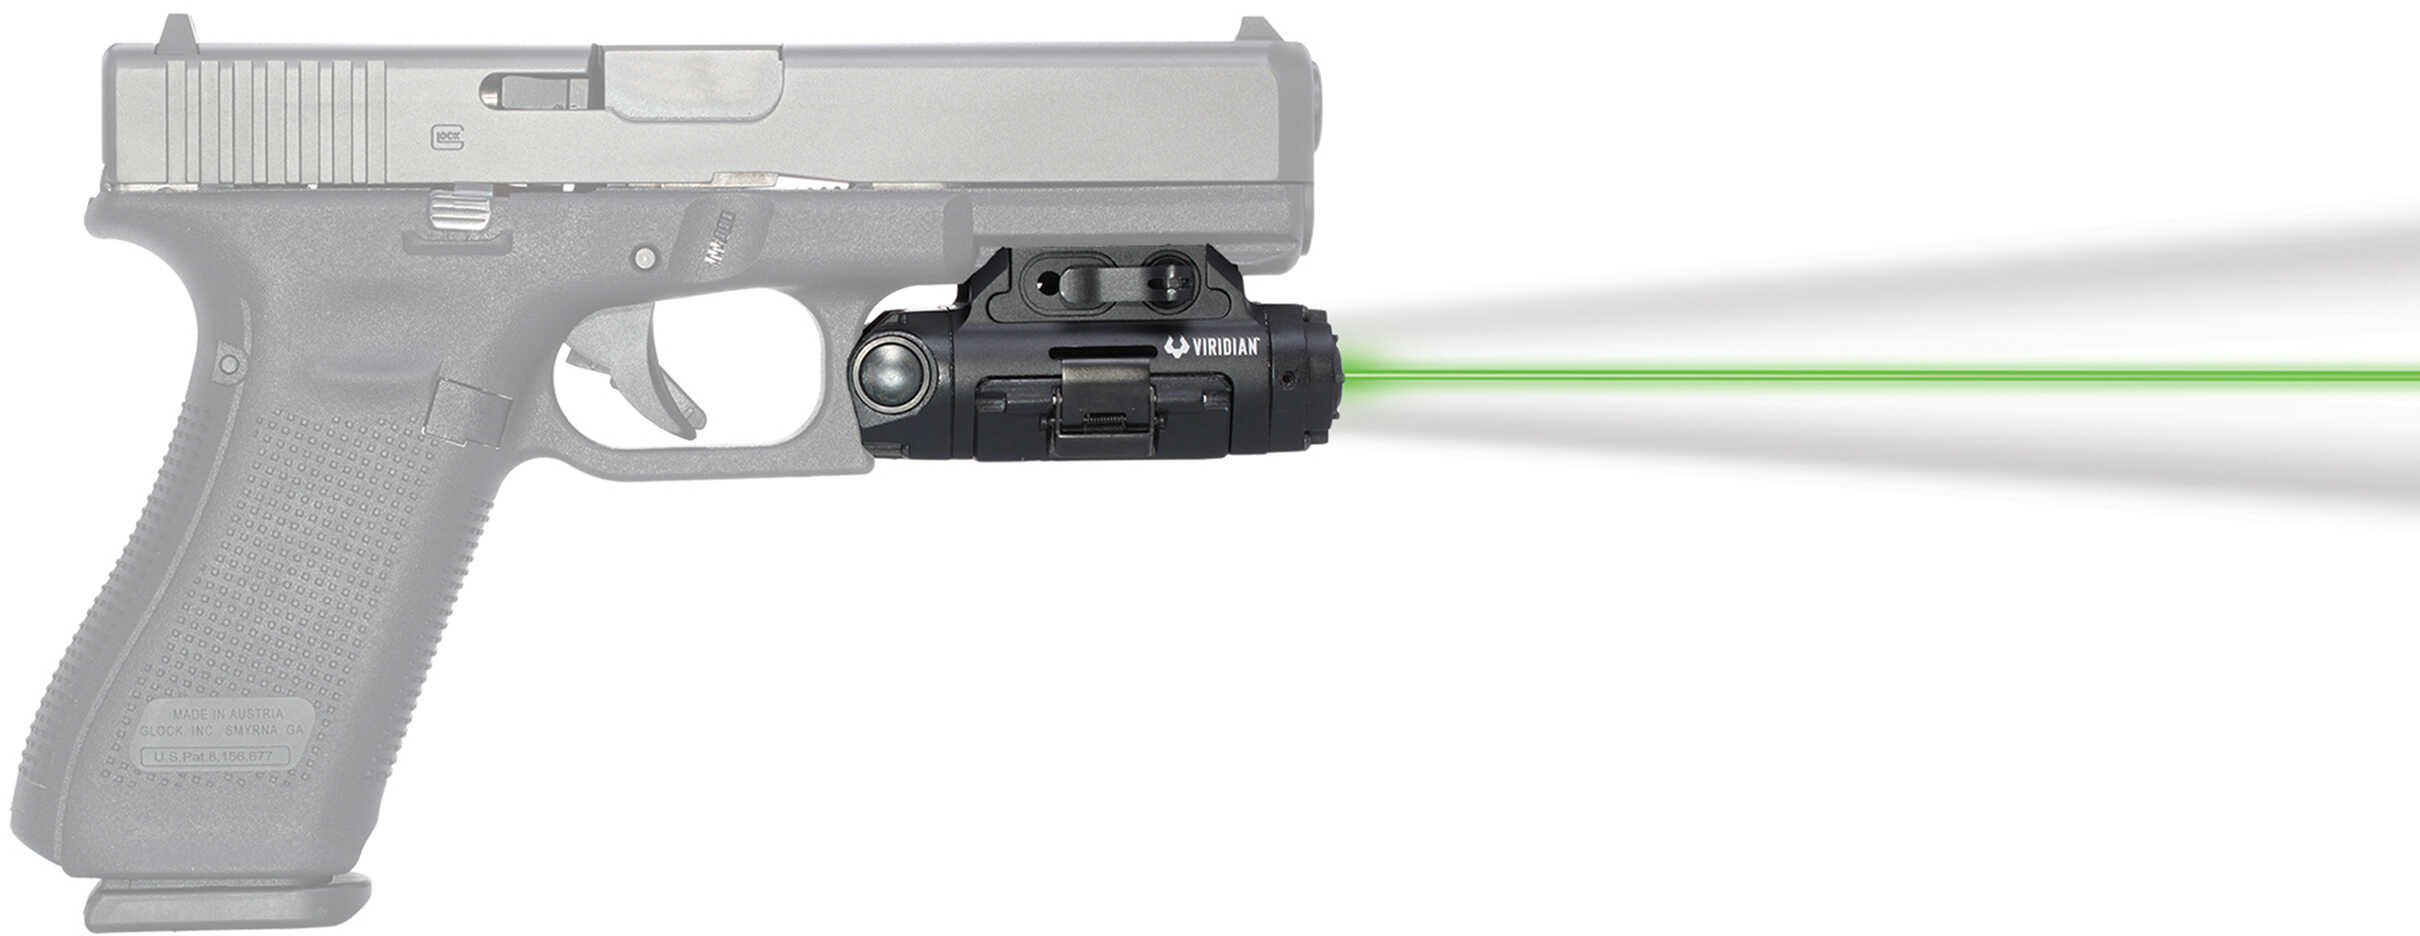 Viridian Weapon Technologies X5L Gen 3 Light 500 Lumen with Green Laser Sight Rechargeable Battery Universal